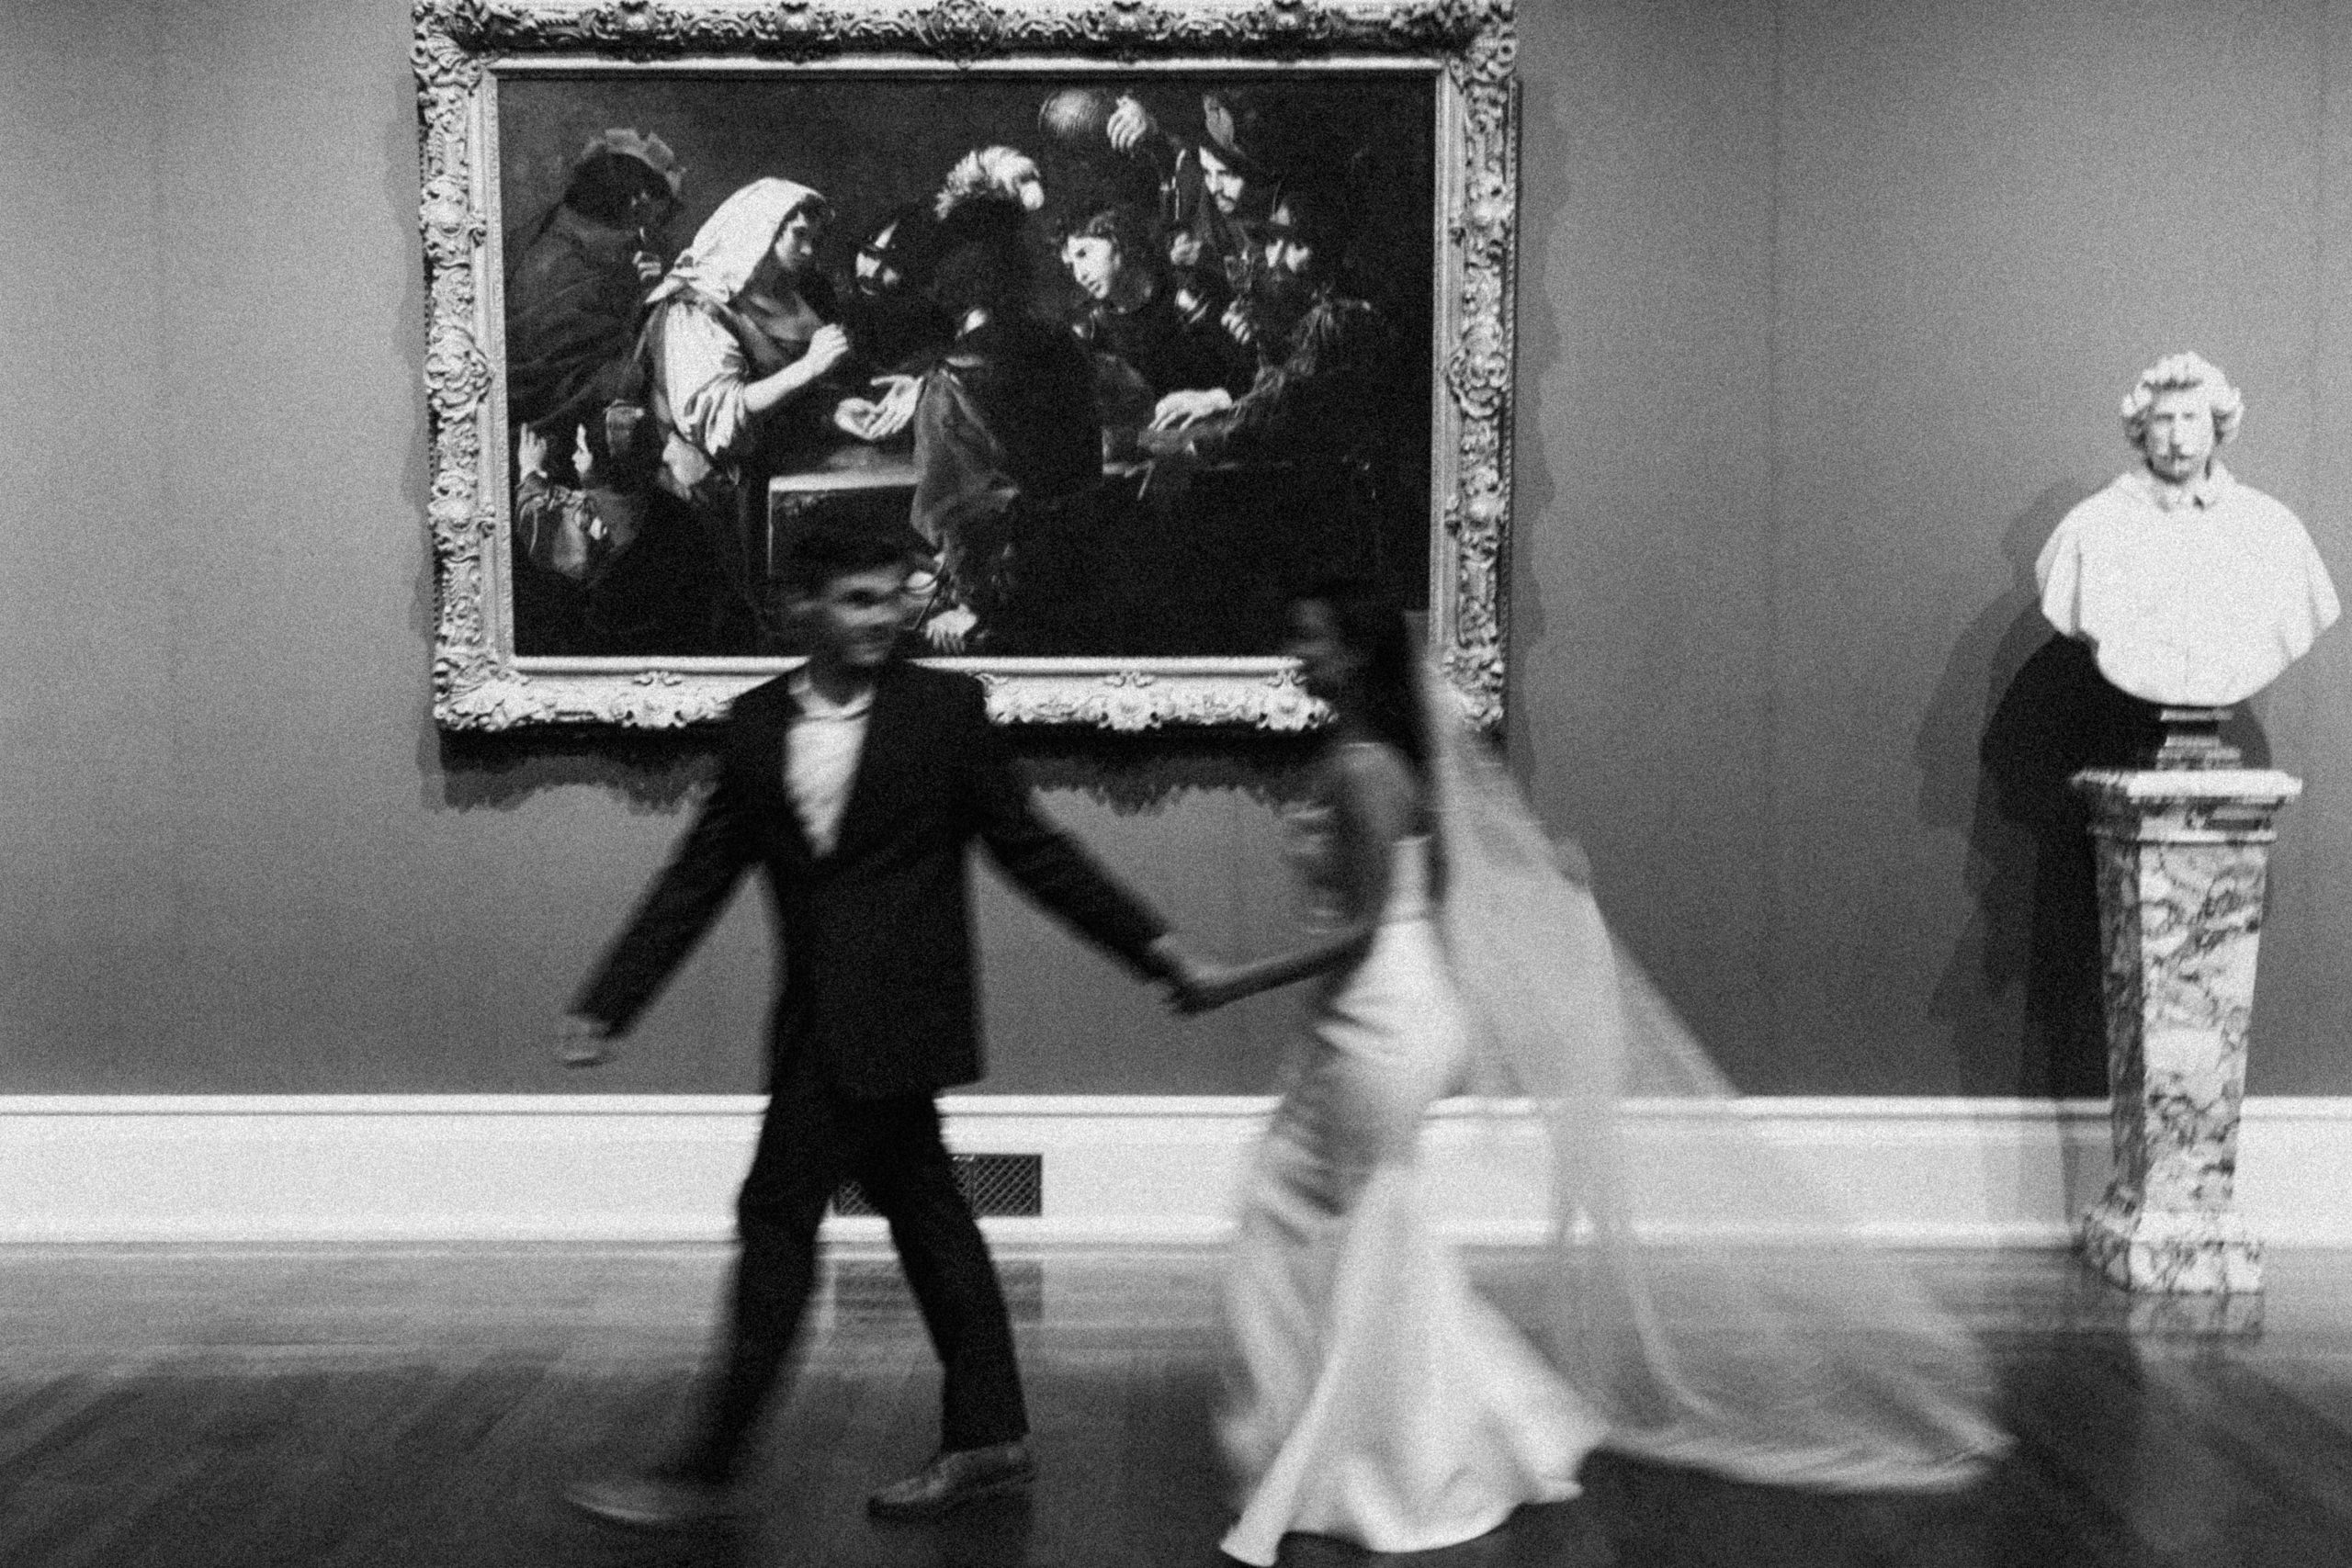 Couple Eloping at art exhibit at the Toledo museum of art in Ohio.